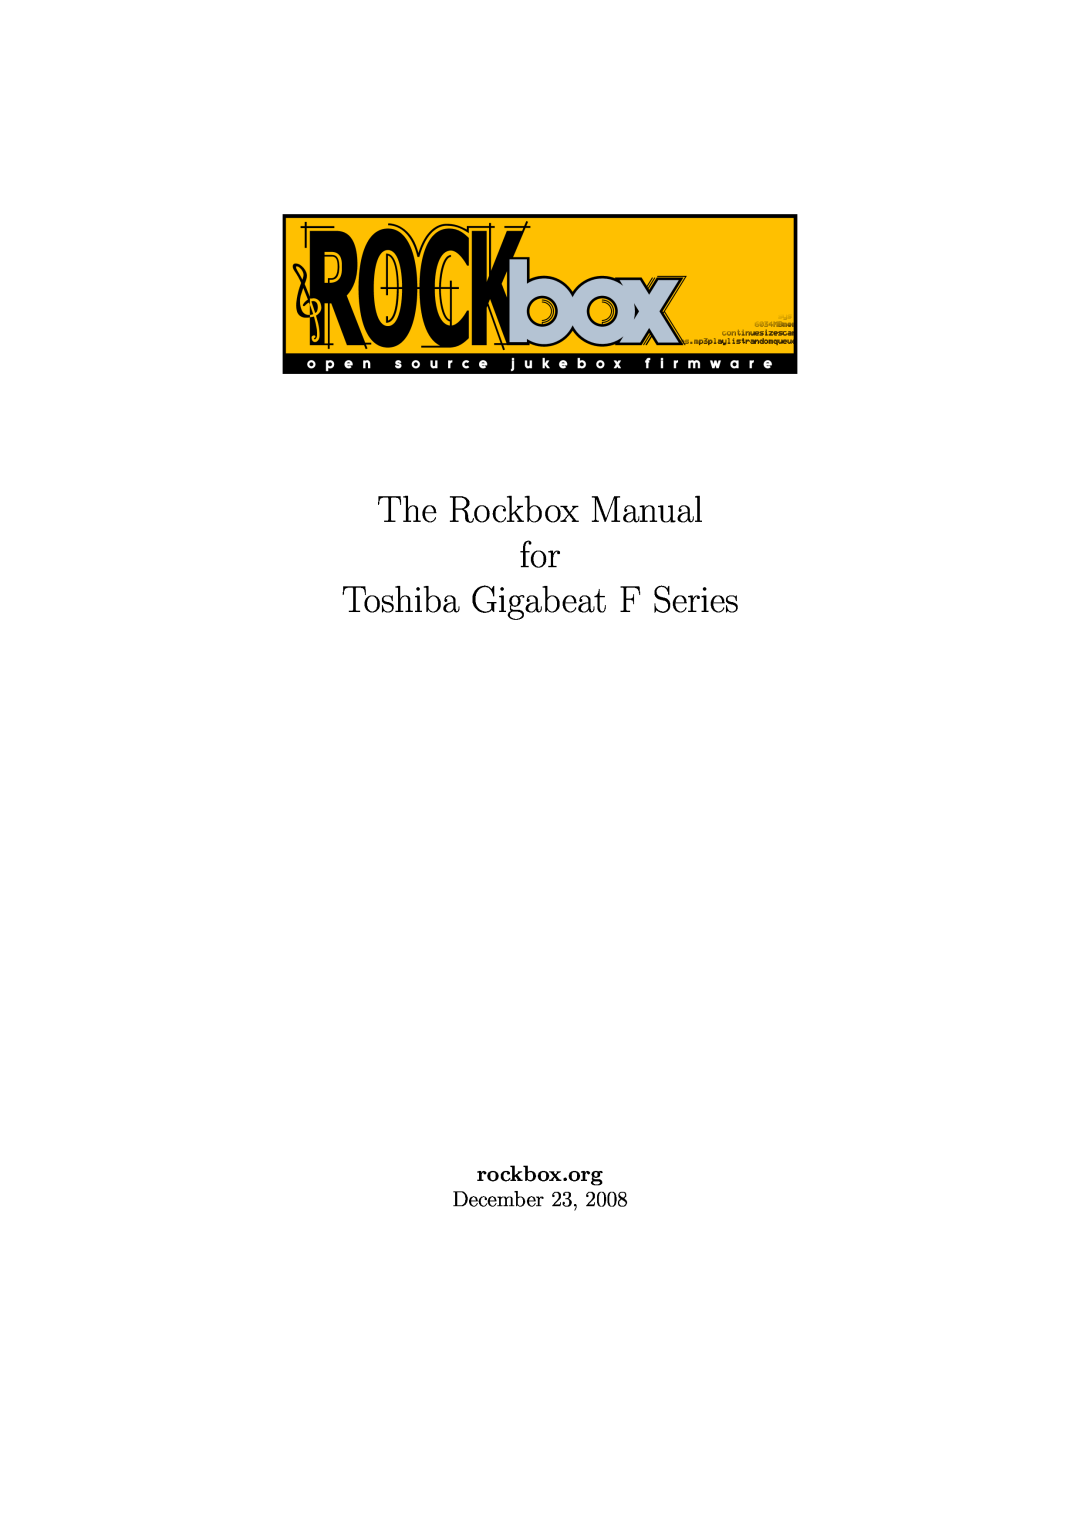 Toshiba manual The Rockbox Manual for Toshiba Gigabeat F Series, rockbox.org December 23 